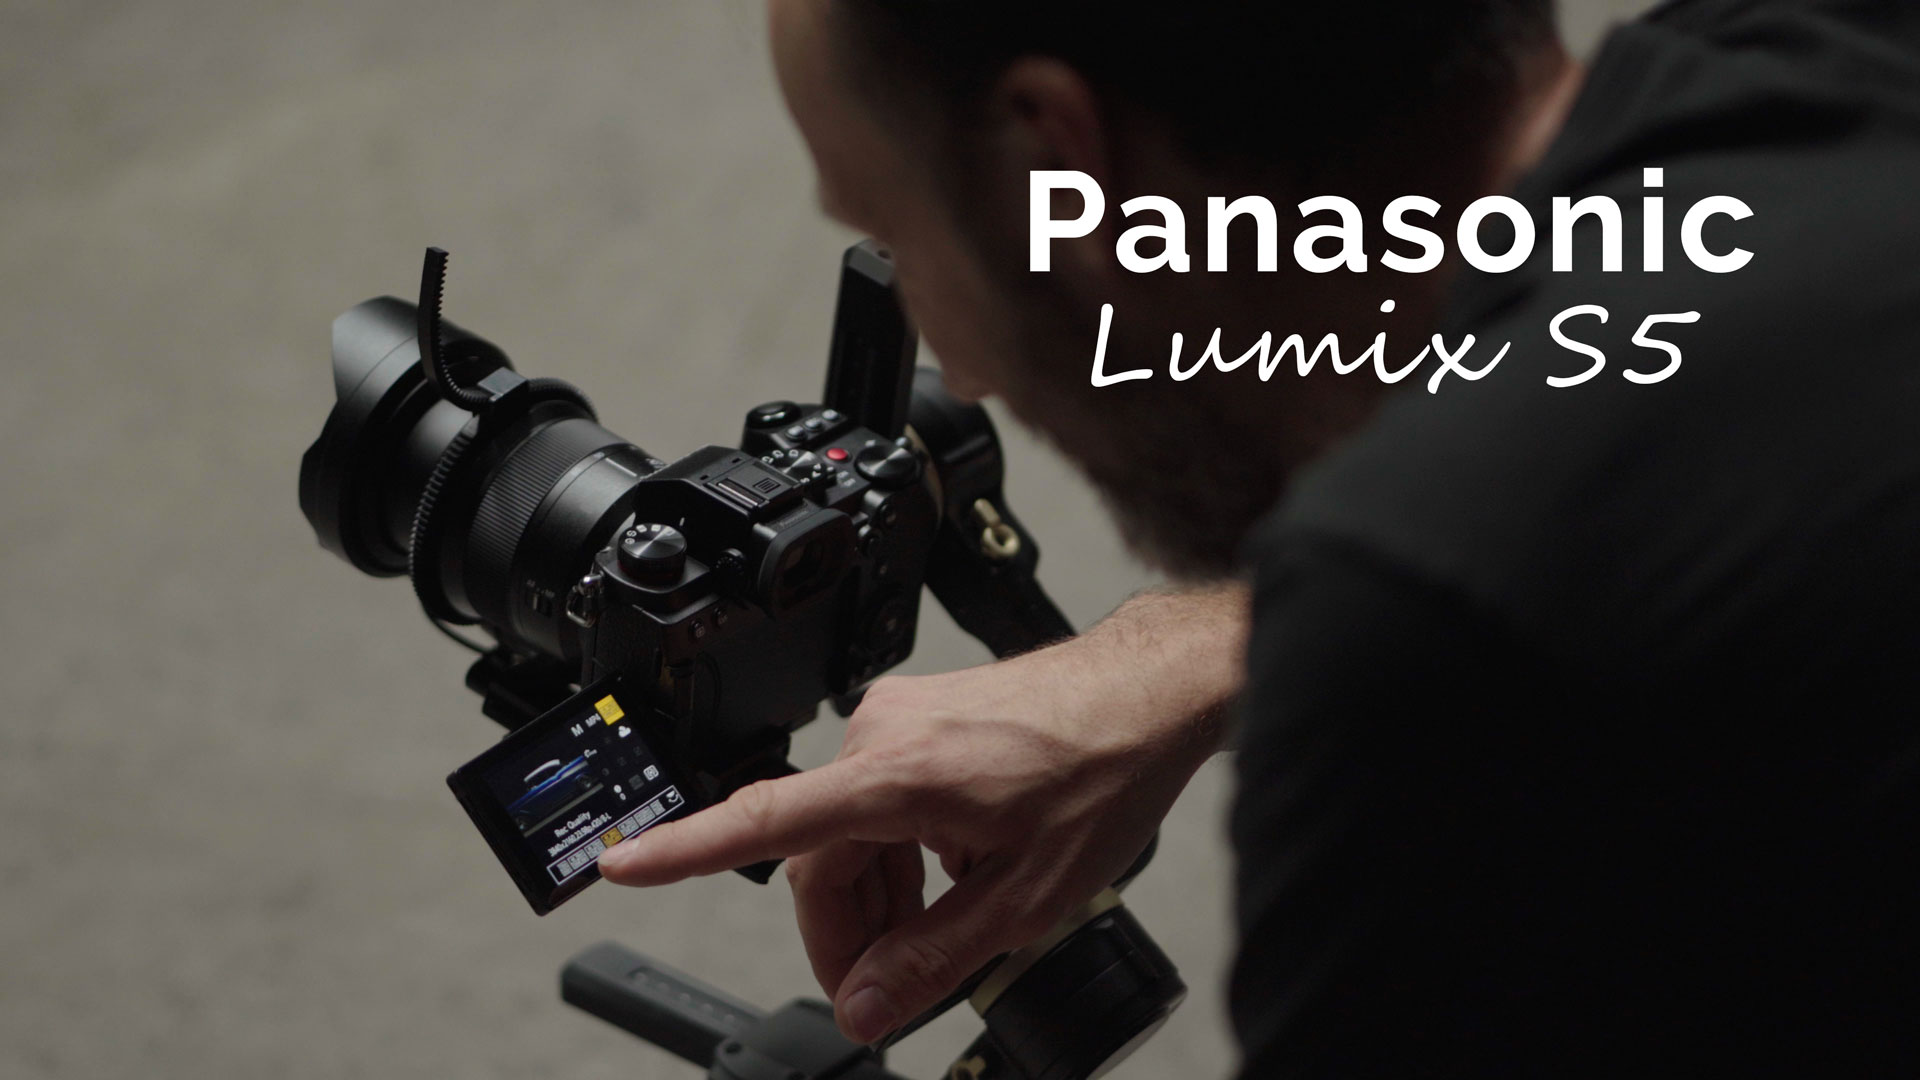 Panasonic Announces a Rush on Orders of the Panasonic Lumix S5 II